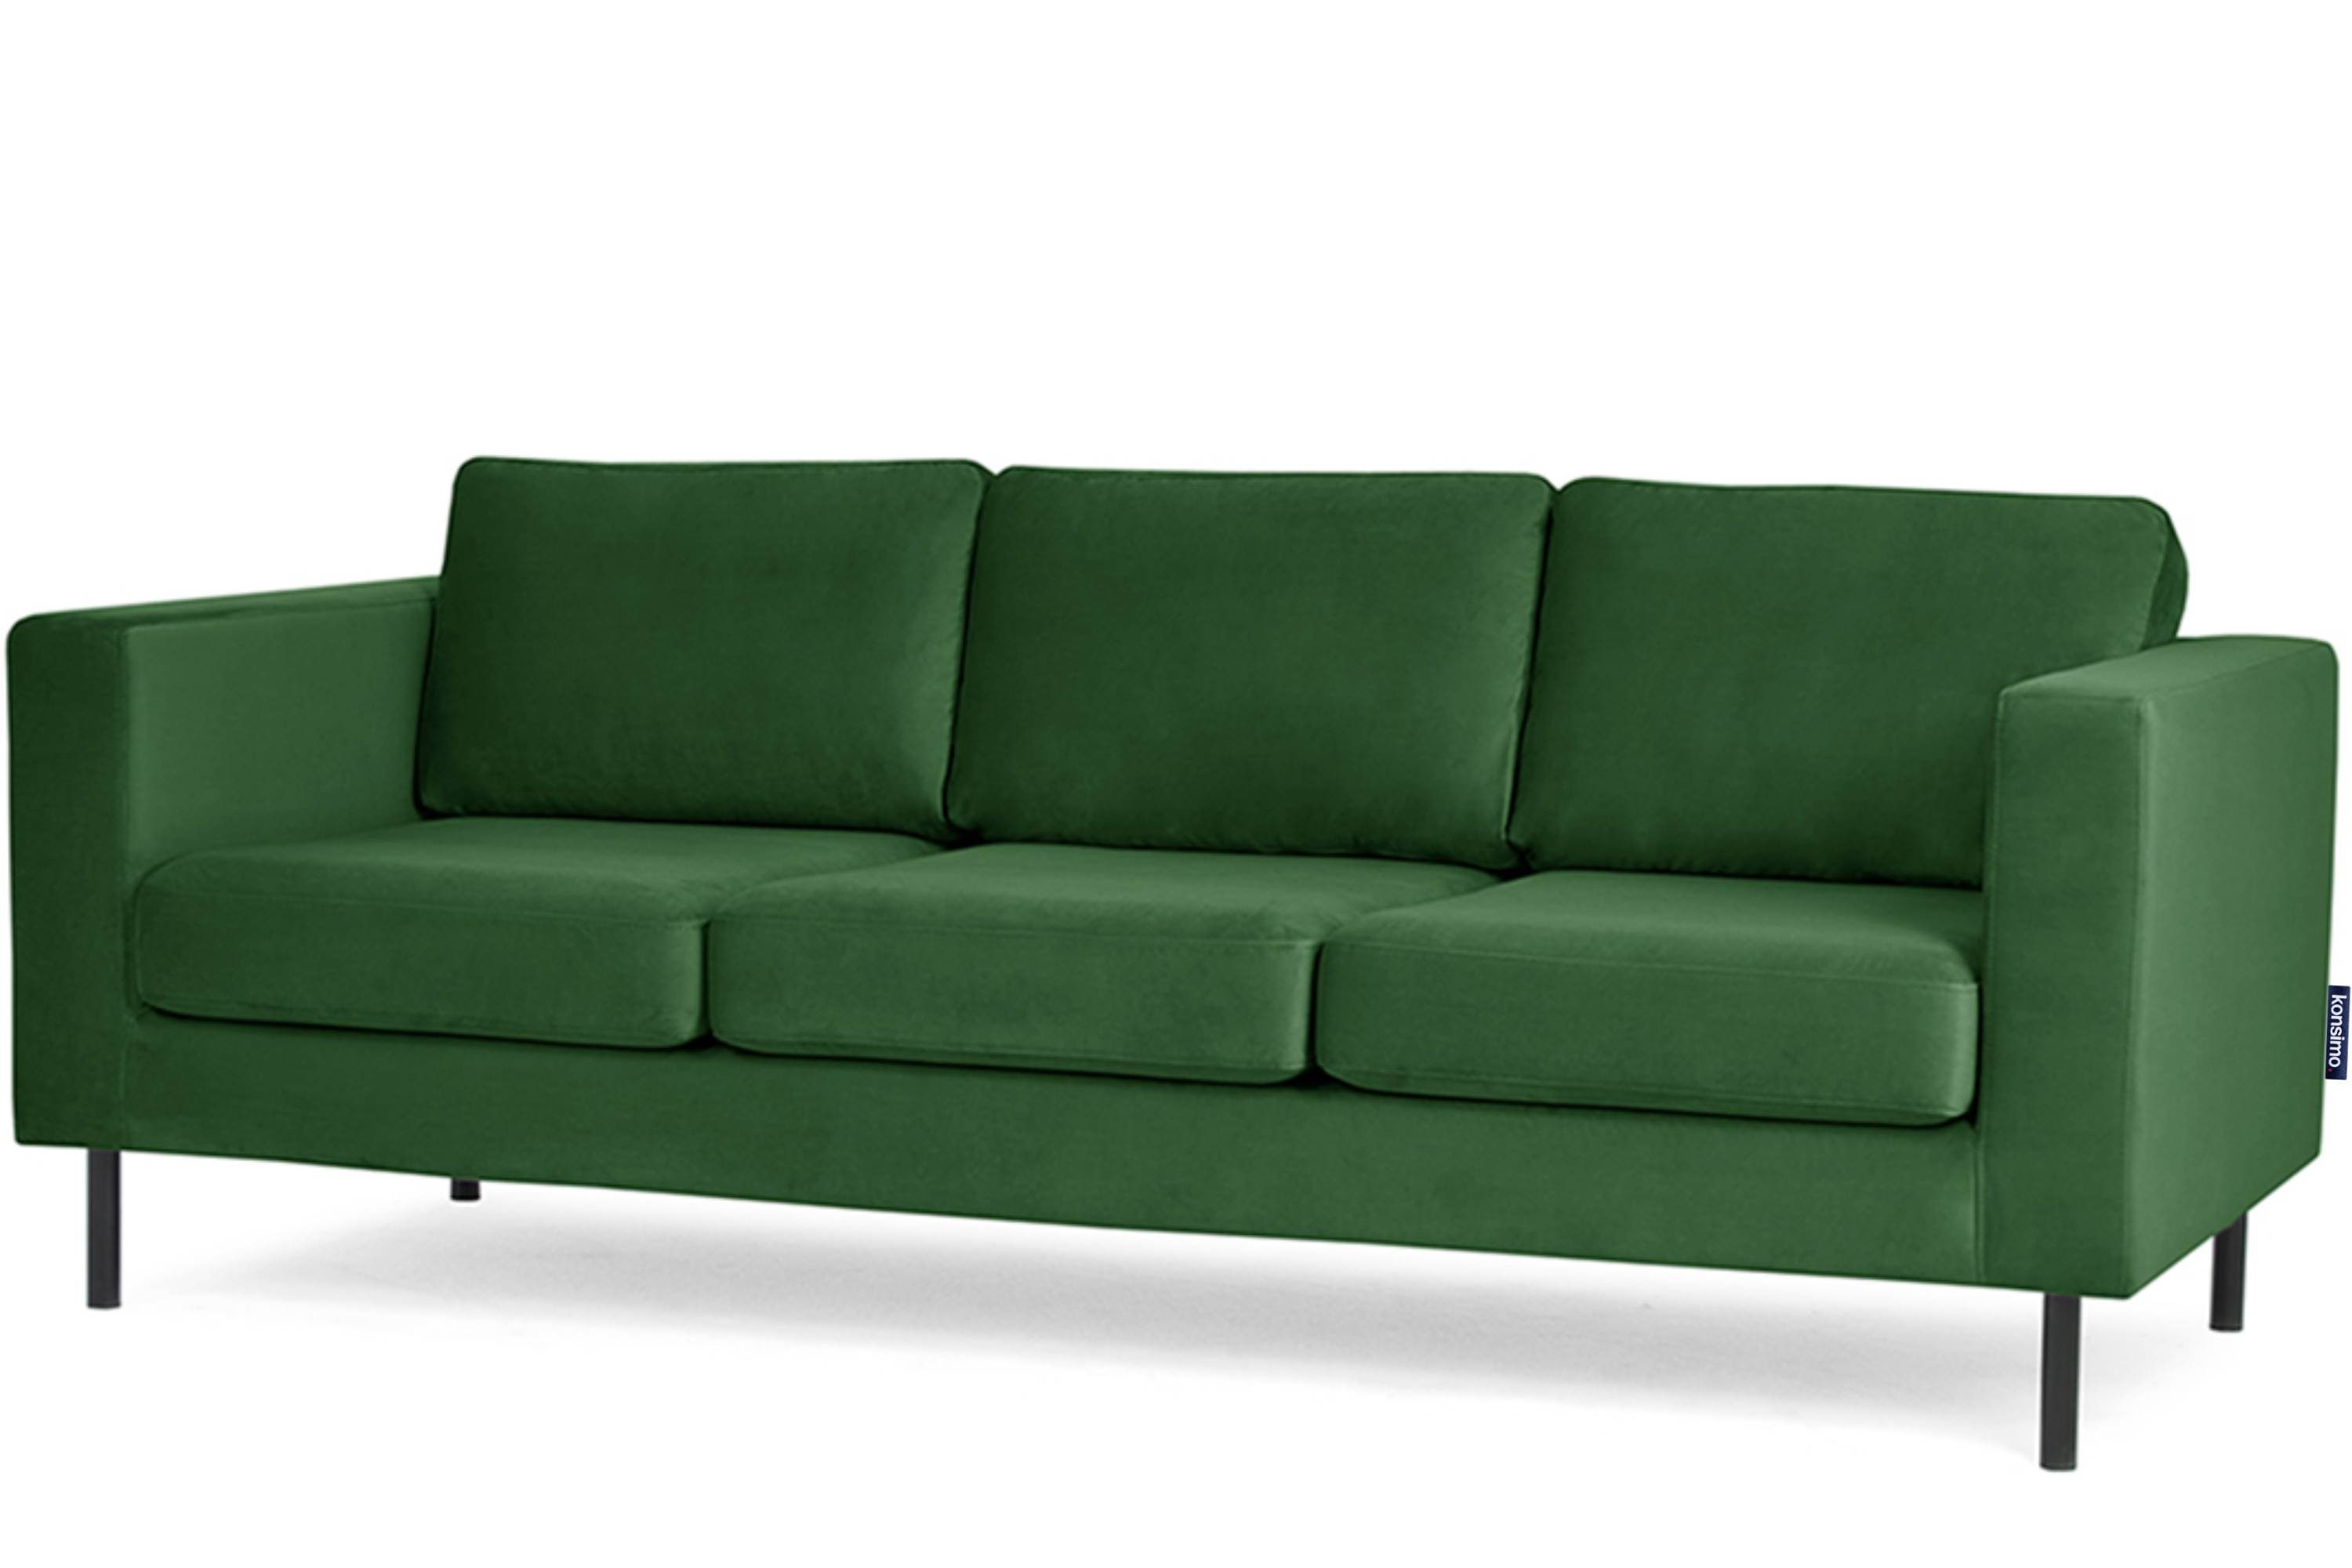 Konsimo 3-Sitzer TOZZI Sofa 3 grün | Design universelles grün grün hohe | Personen, Beine